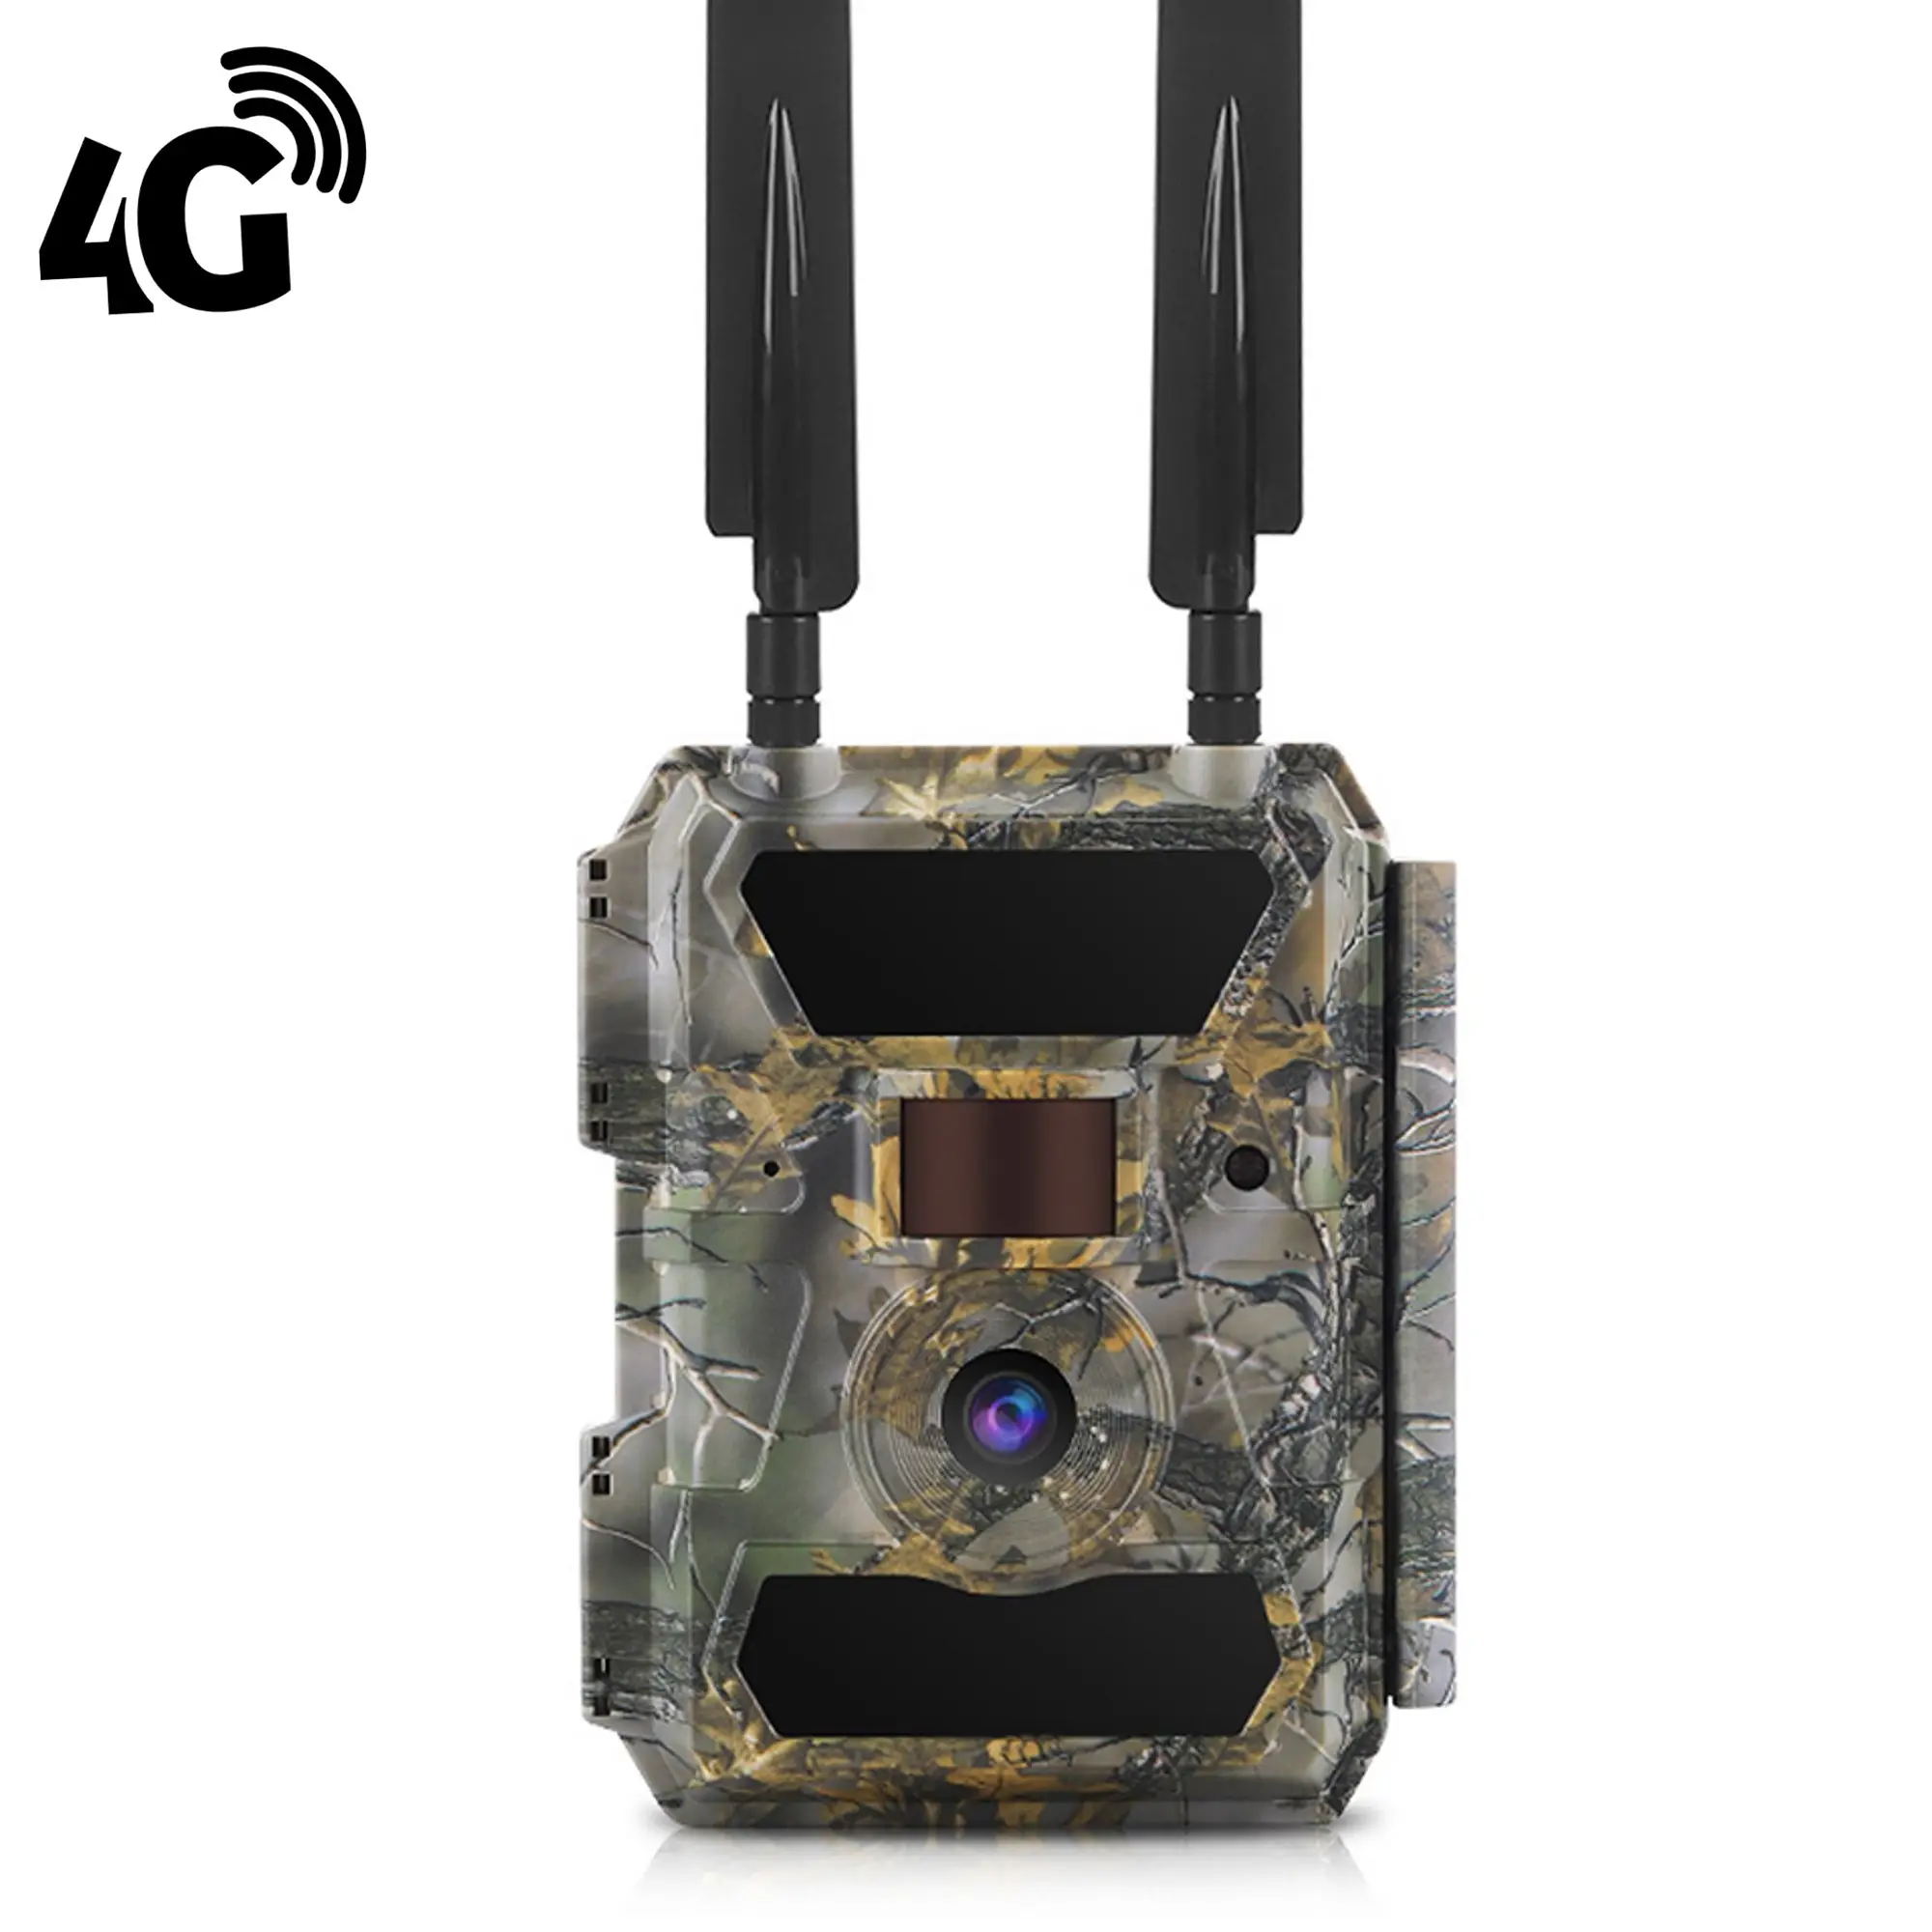 Wildlife Game Hunting PIR Infrared Night Vision CMOS Sensor Motion Sensor Camera